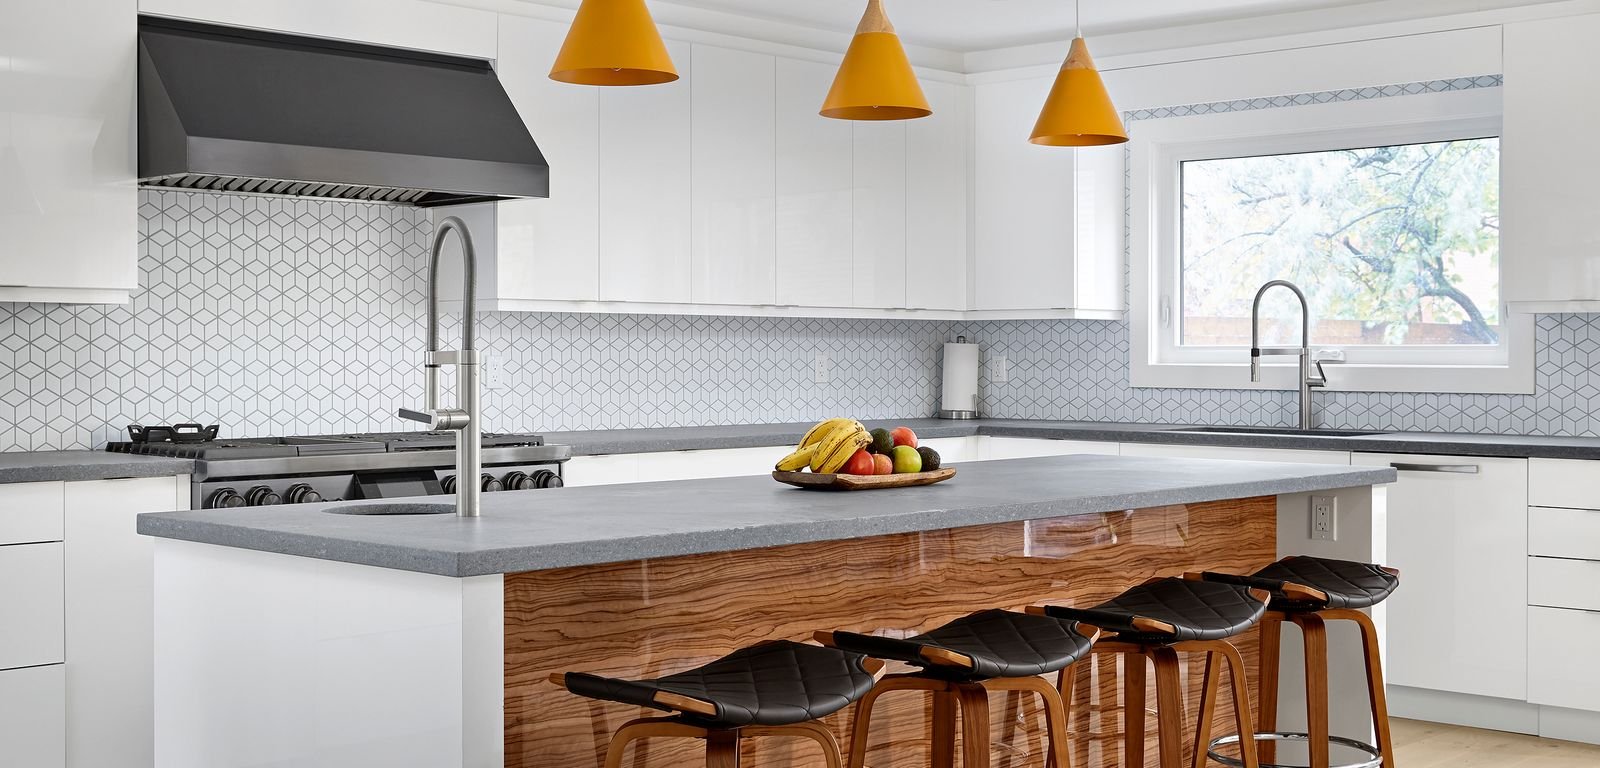 netzero custom kitchen renovation with barstool at island yellow pendant lights and hexagonal backsplash in markham